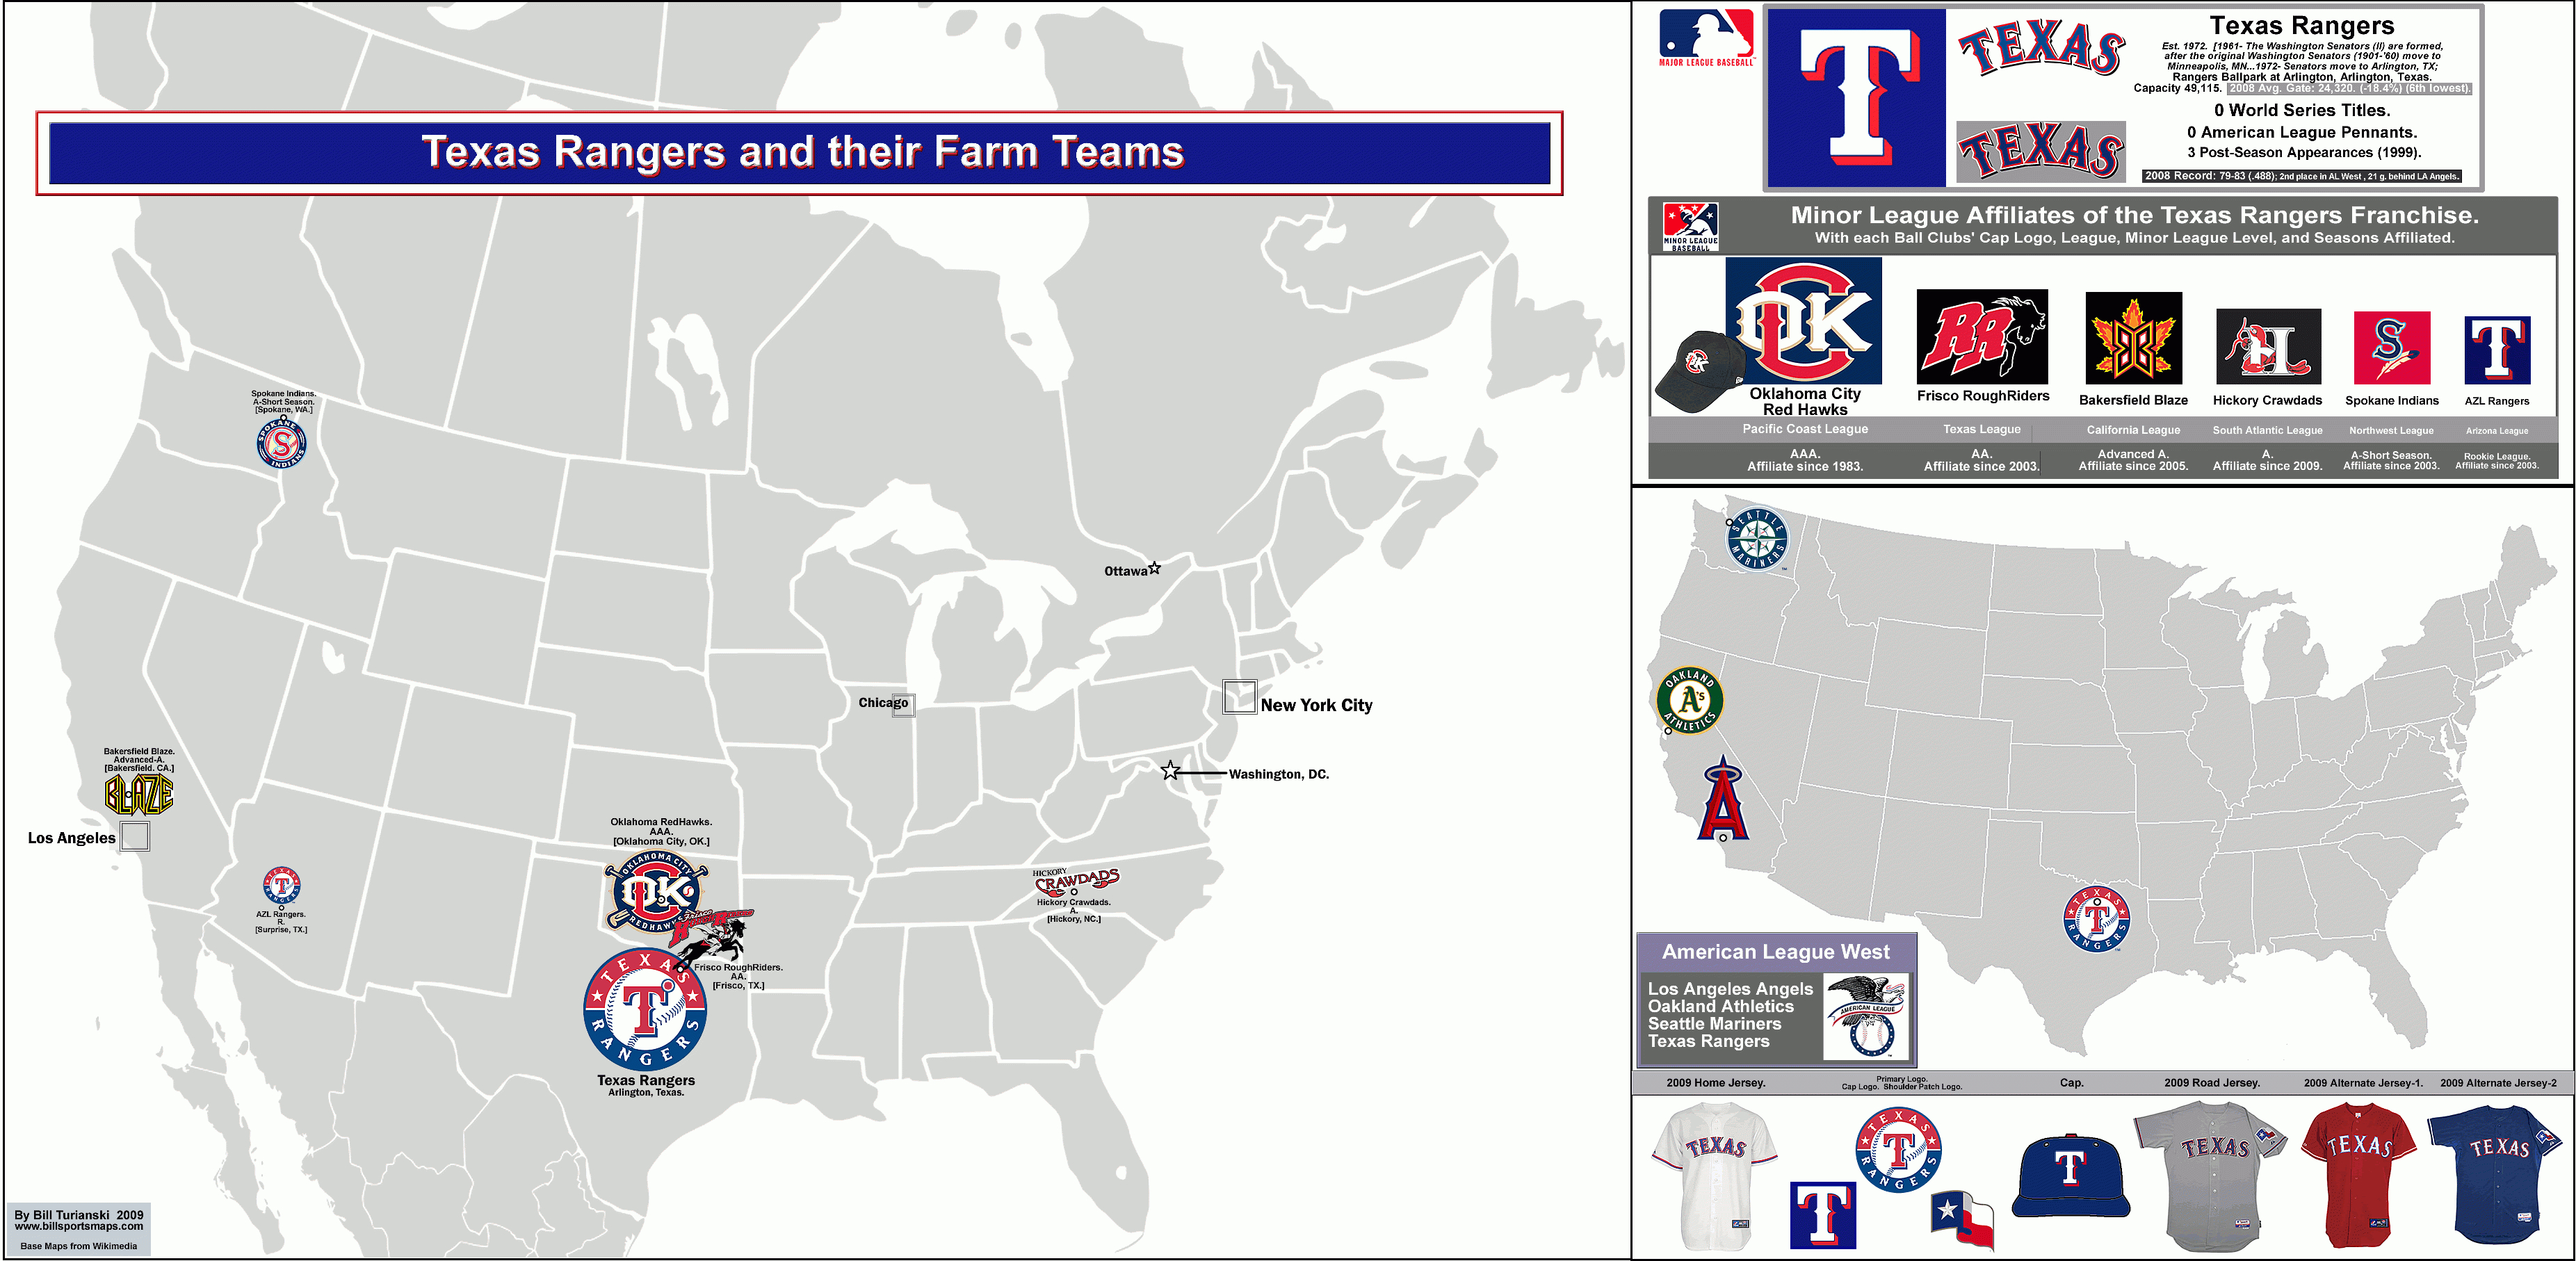 Mlb Ball Clubs And Their Minor League Affiliates: The Texas Rangers - Texas Rangers Map